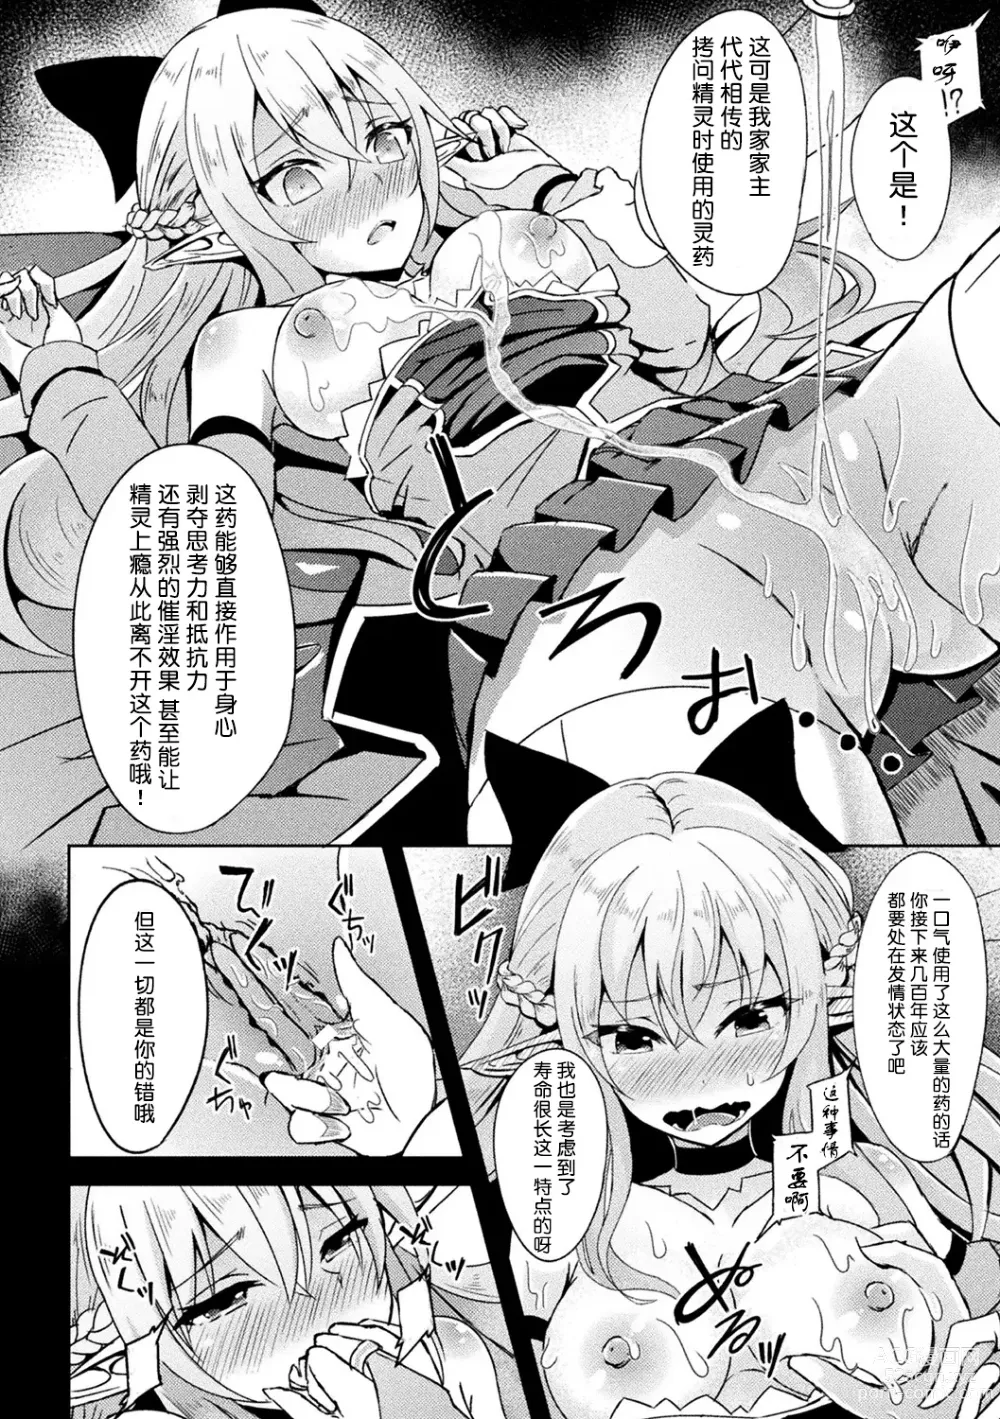 Page 6 of manga 精靈族良家公主殿下薬漬け公開陵辱